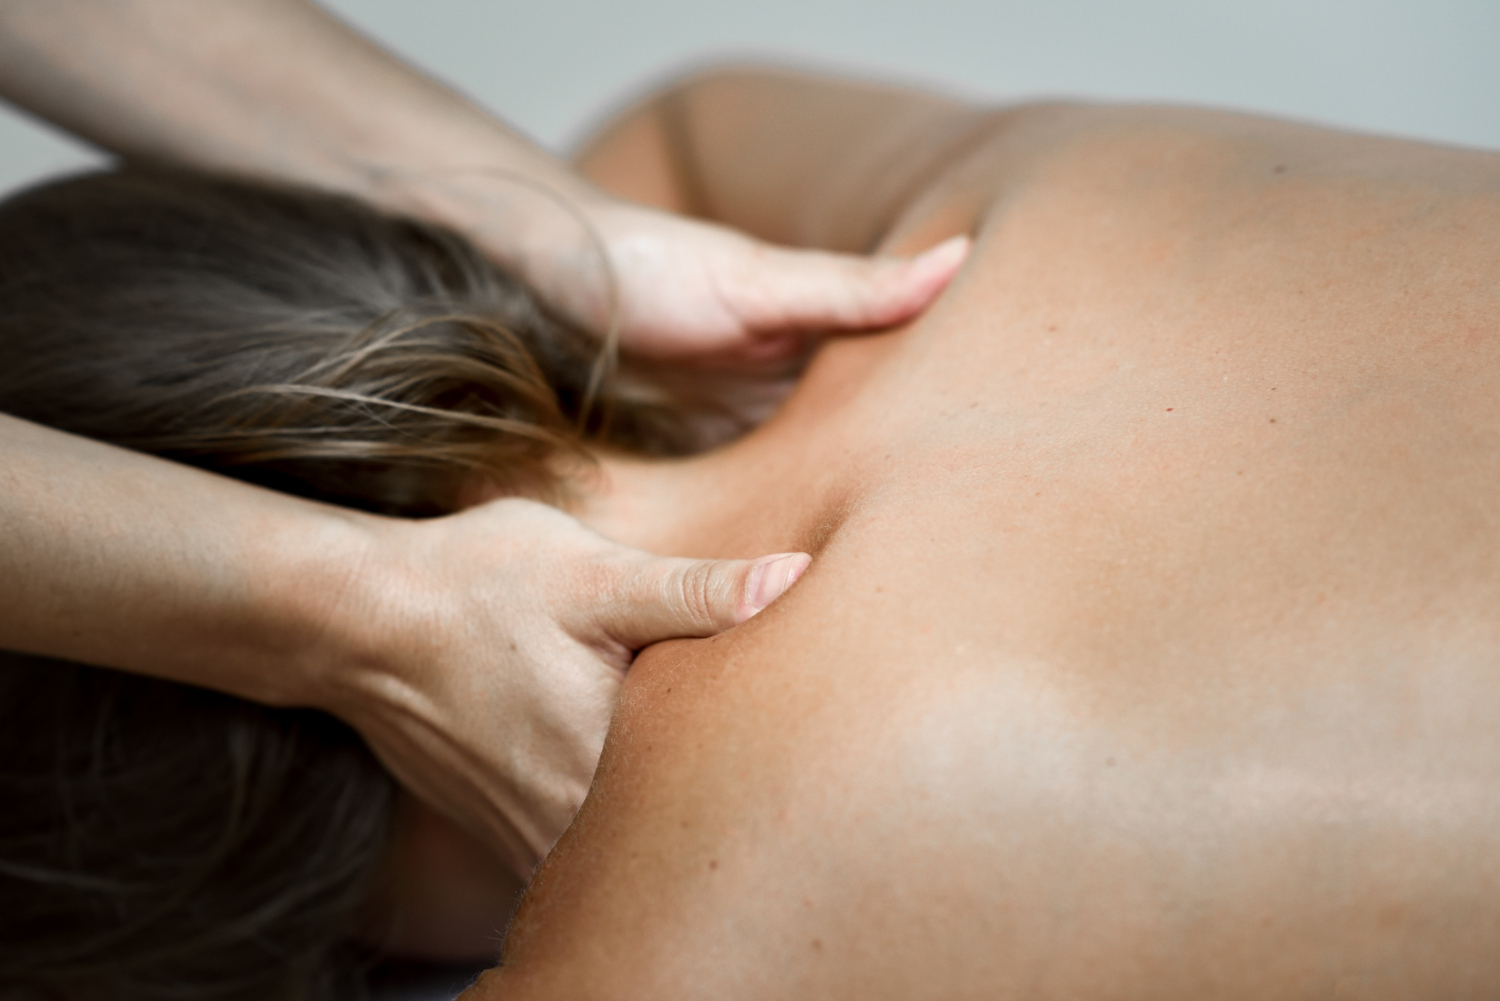 Na co pomaga masaż całego ciała?